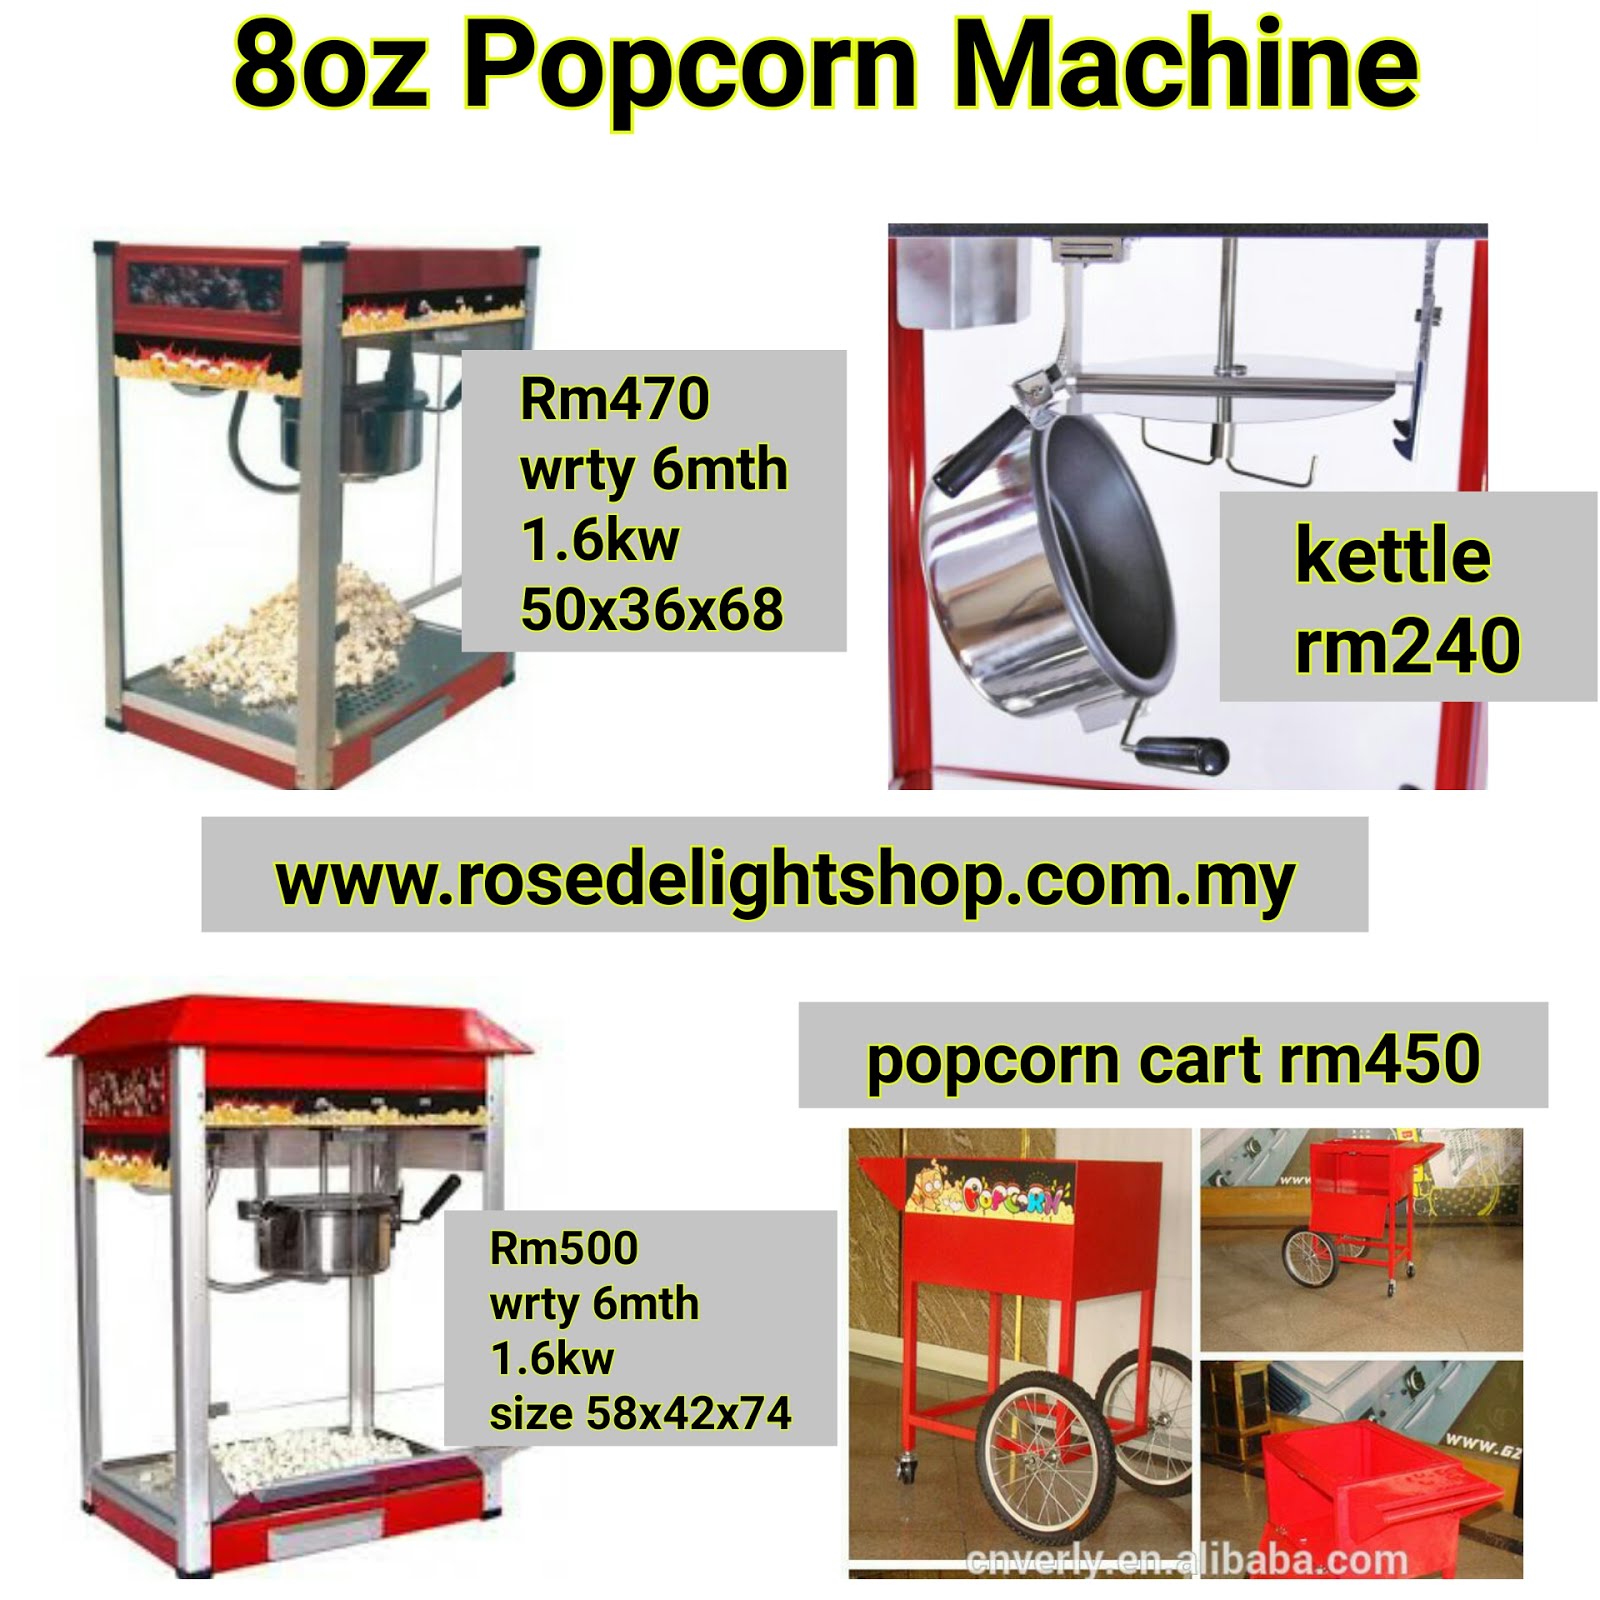 Kateloq Popcorn Machine